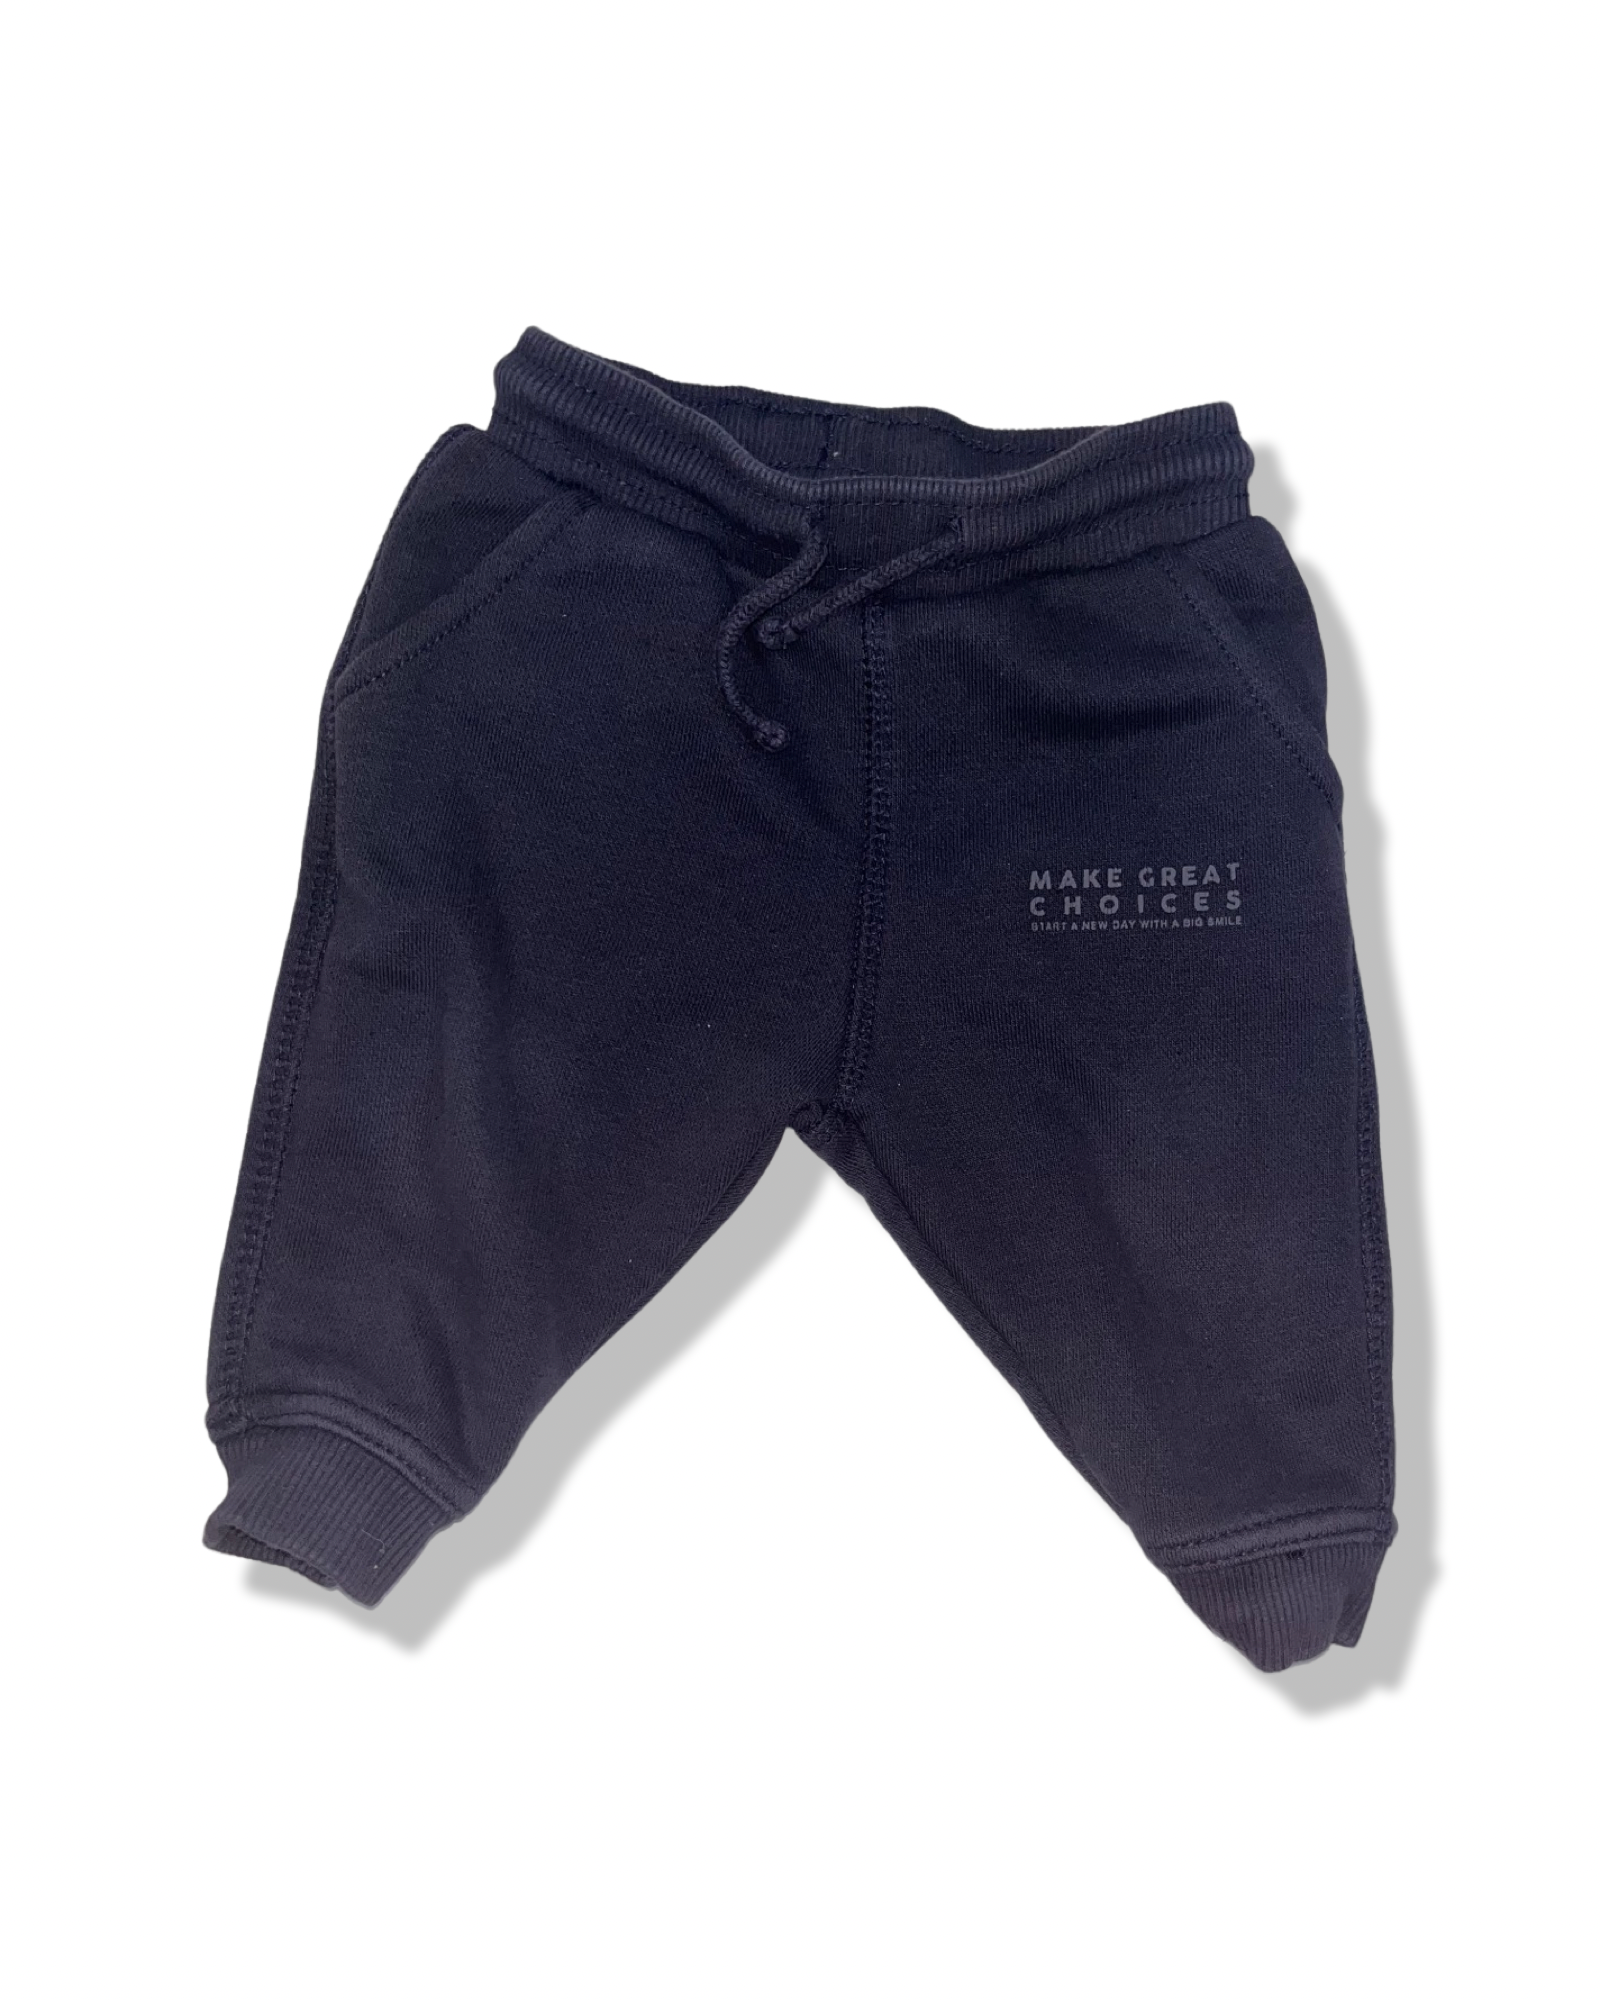 Zara Blue Make Great Choices Sweat Pants (6-9M)